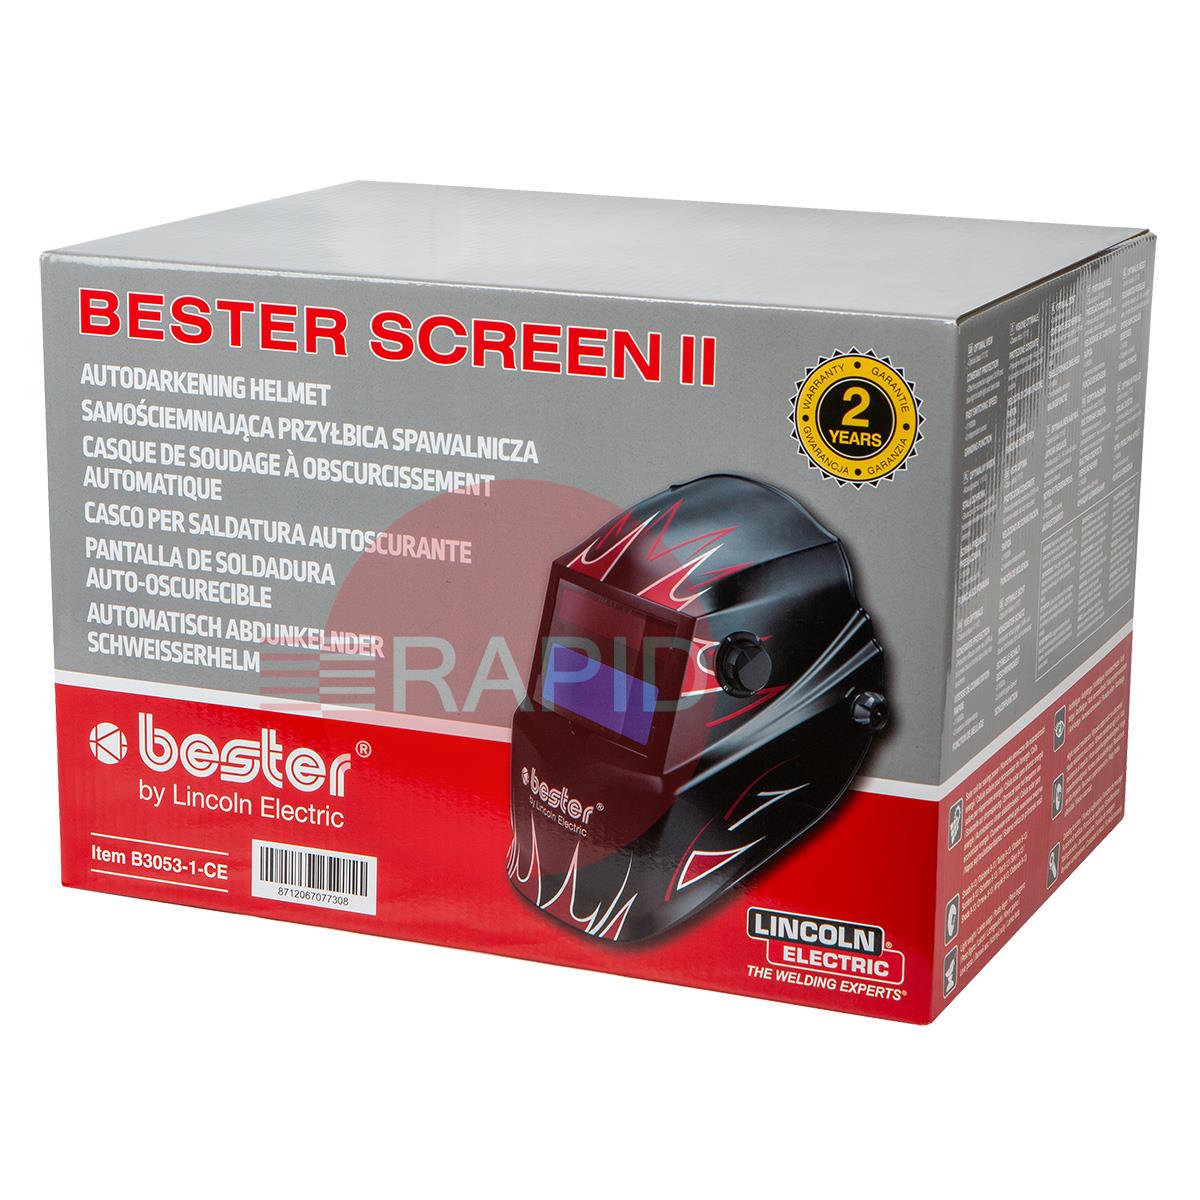 B3053-1-CE  Lincoln Bester Screen II Auto Darkening Welding Helmet, Shades 9-13 Variable